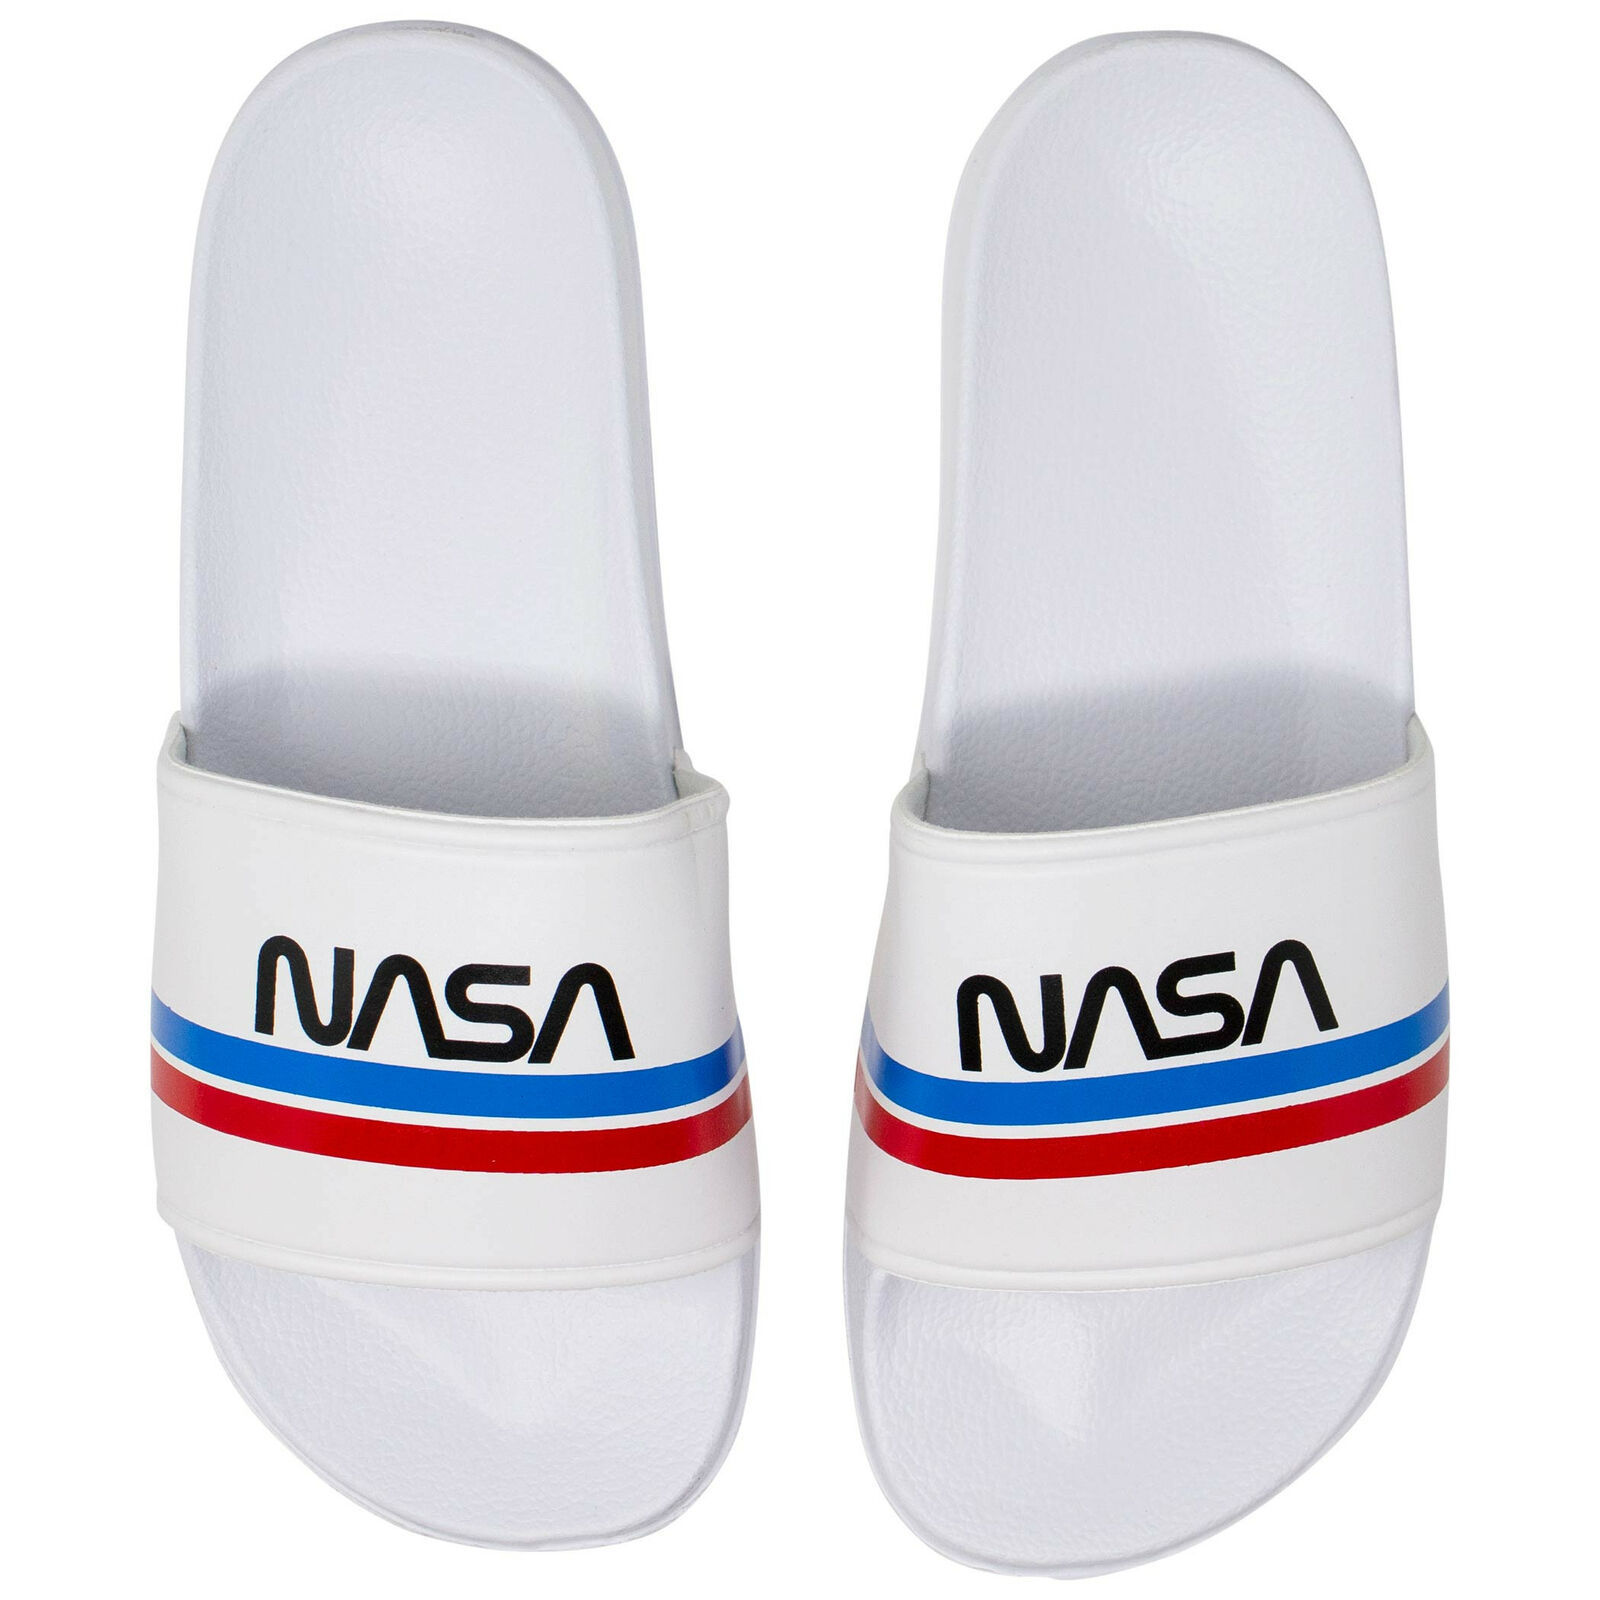 NASA Soccer Slides Sandals White - Sandals & Flip Flops